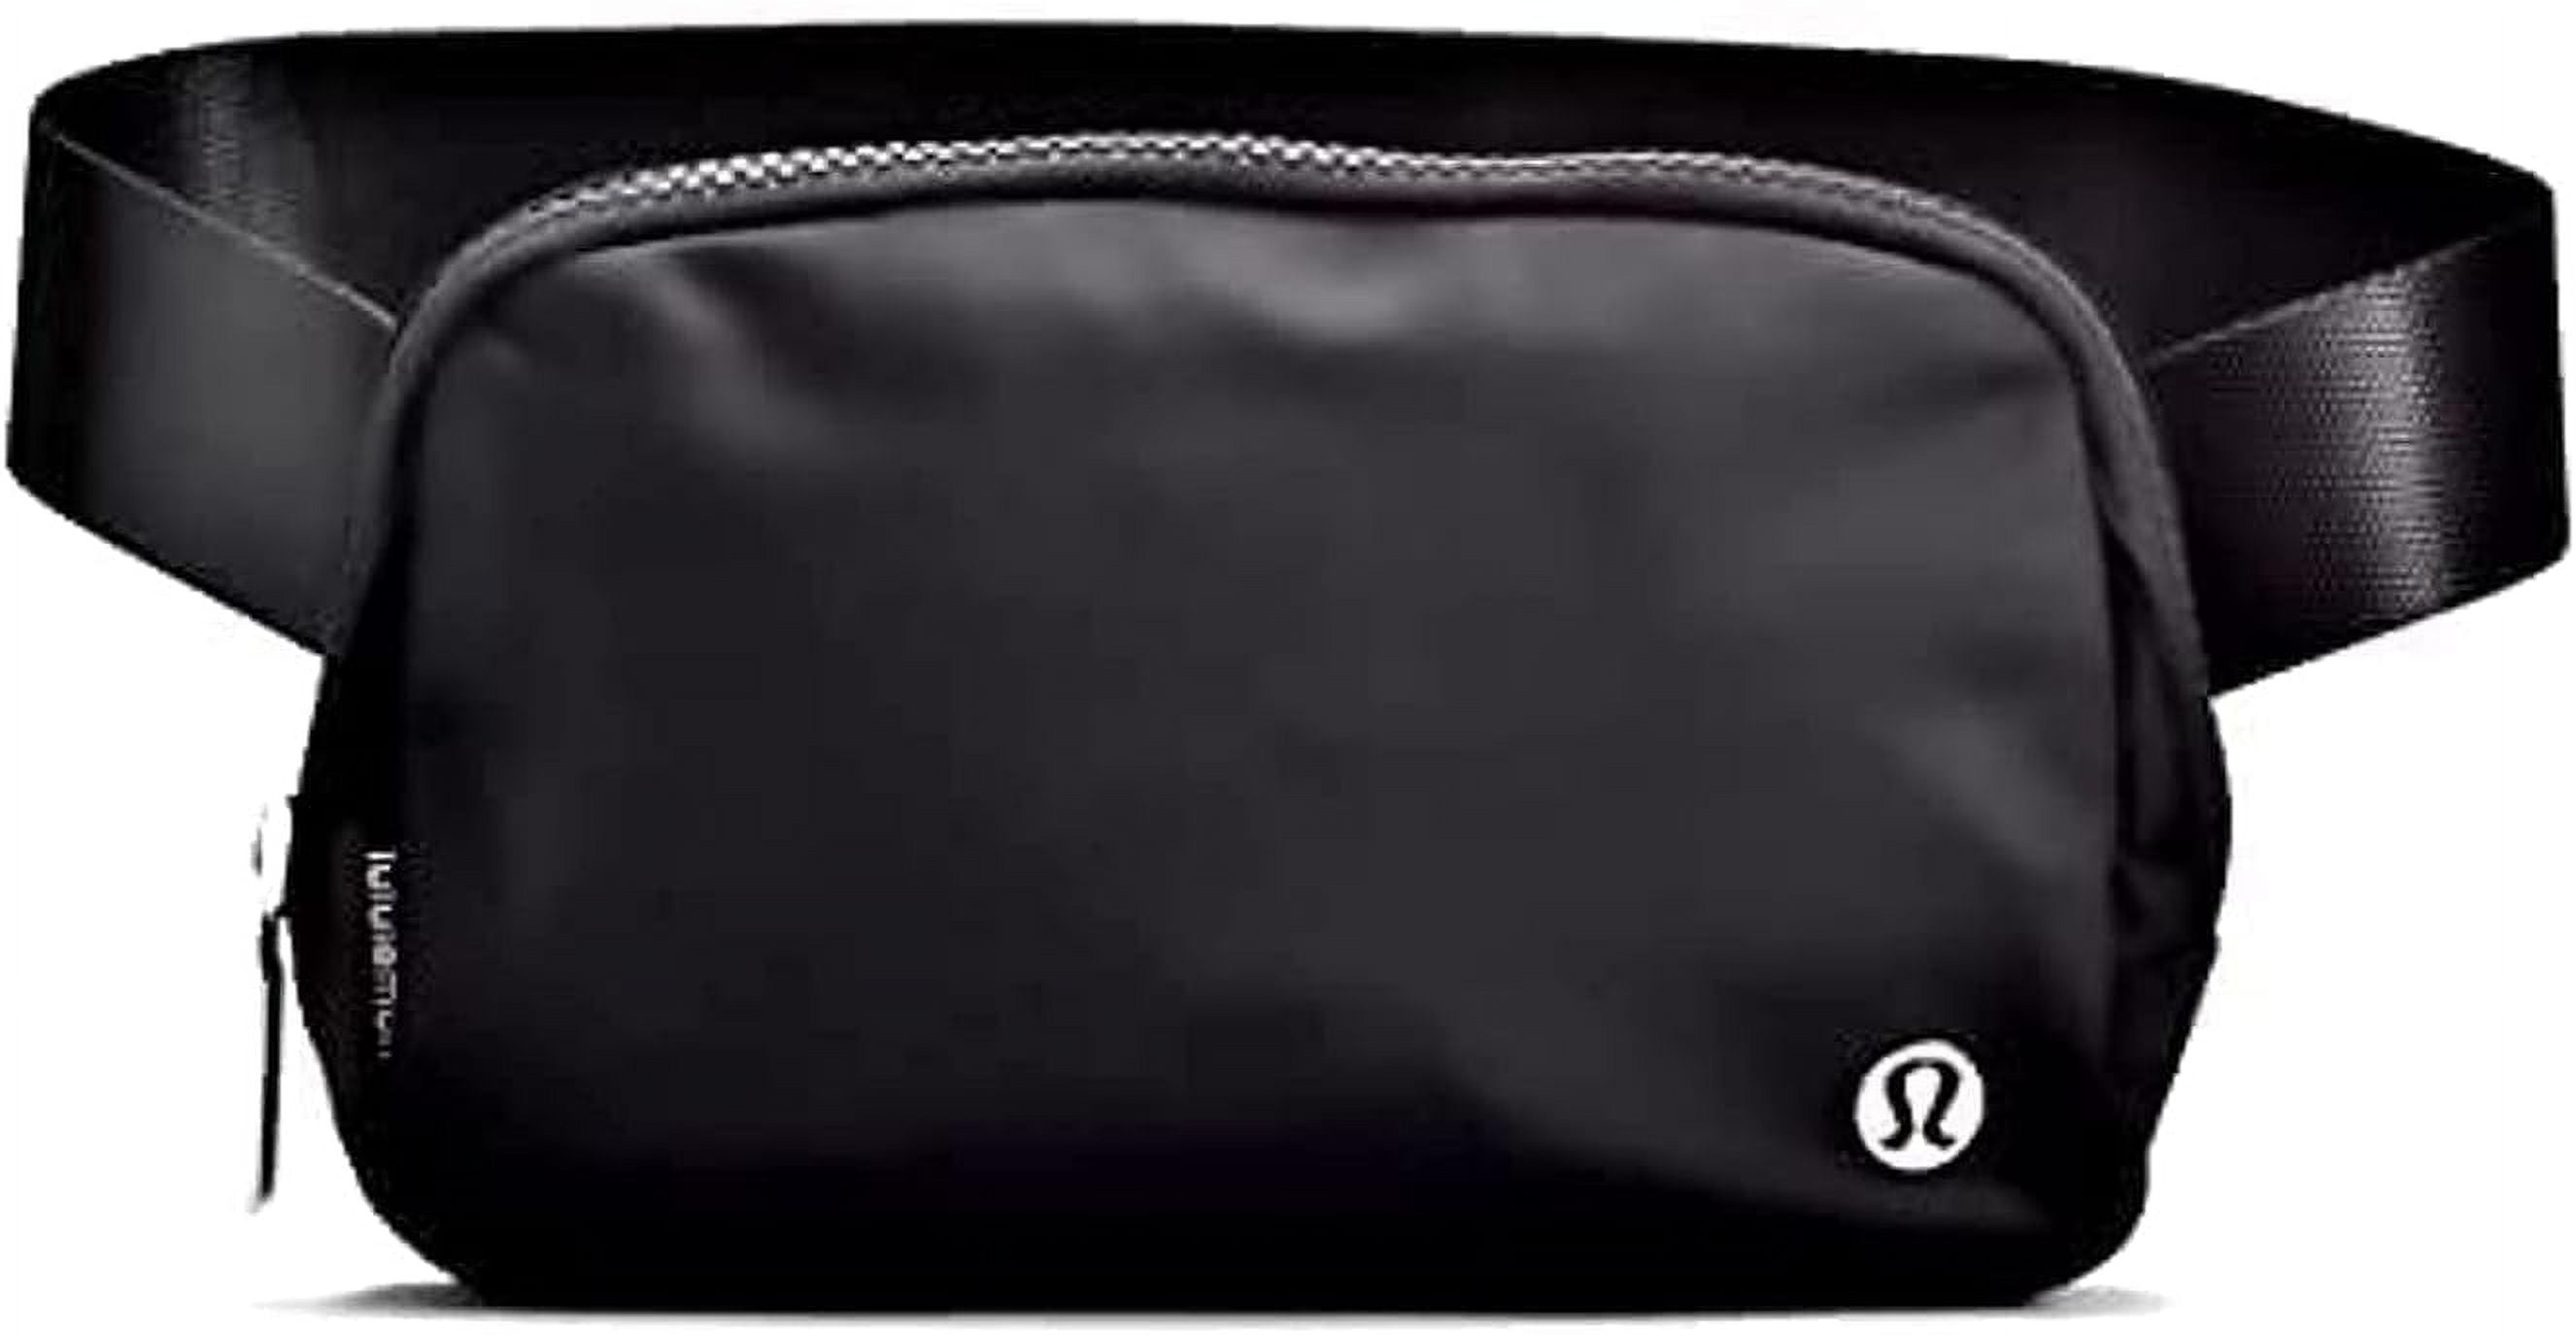 Lululemon Athletica Everywhere Belt Bag, Black, 7.5 x 5 x 2 inches 